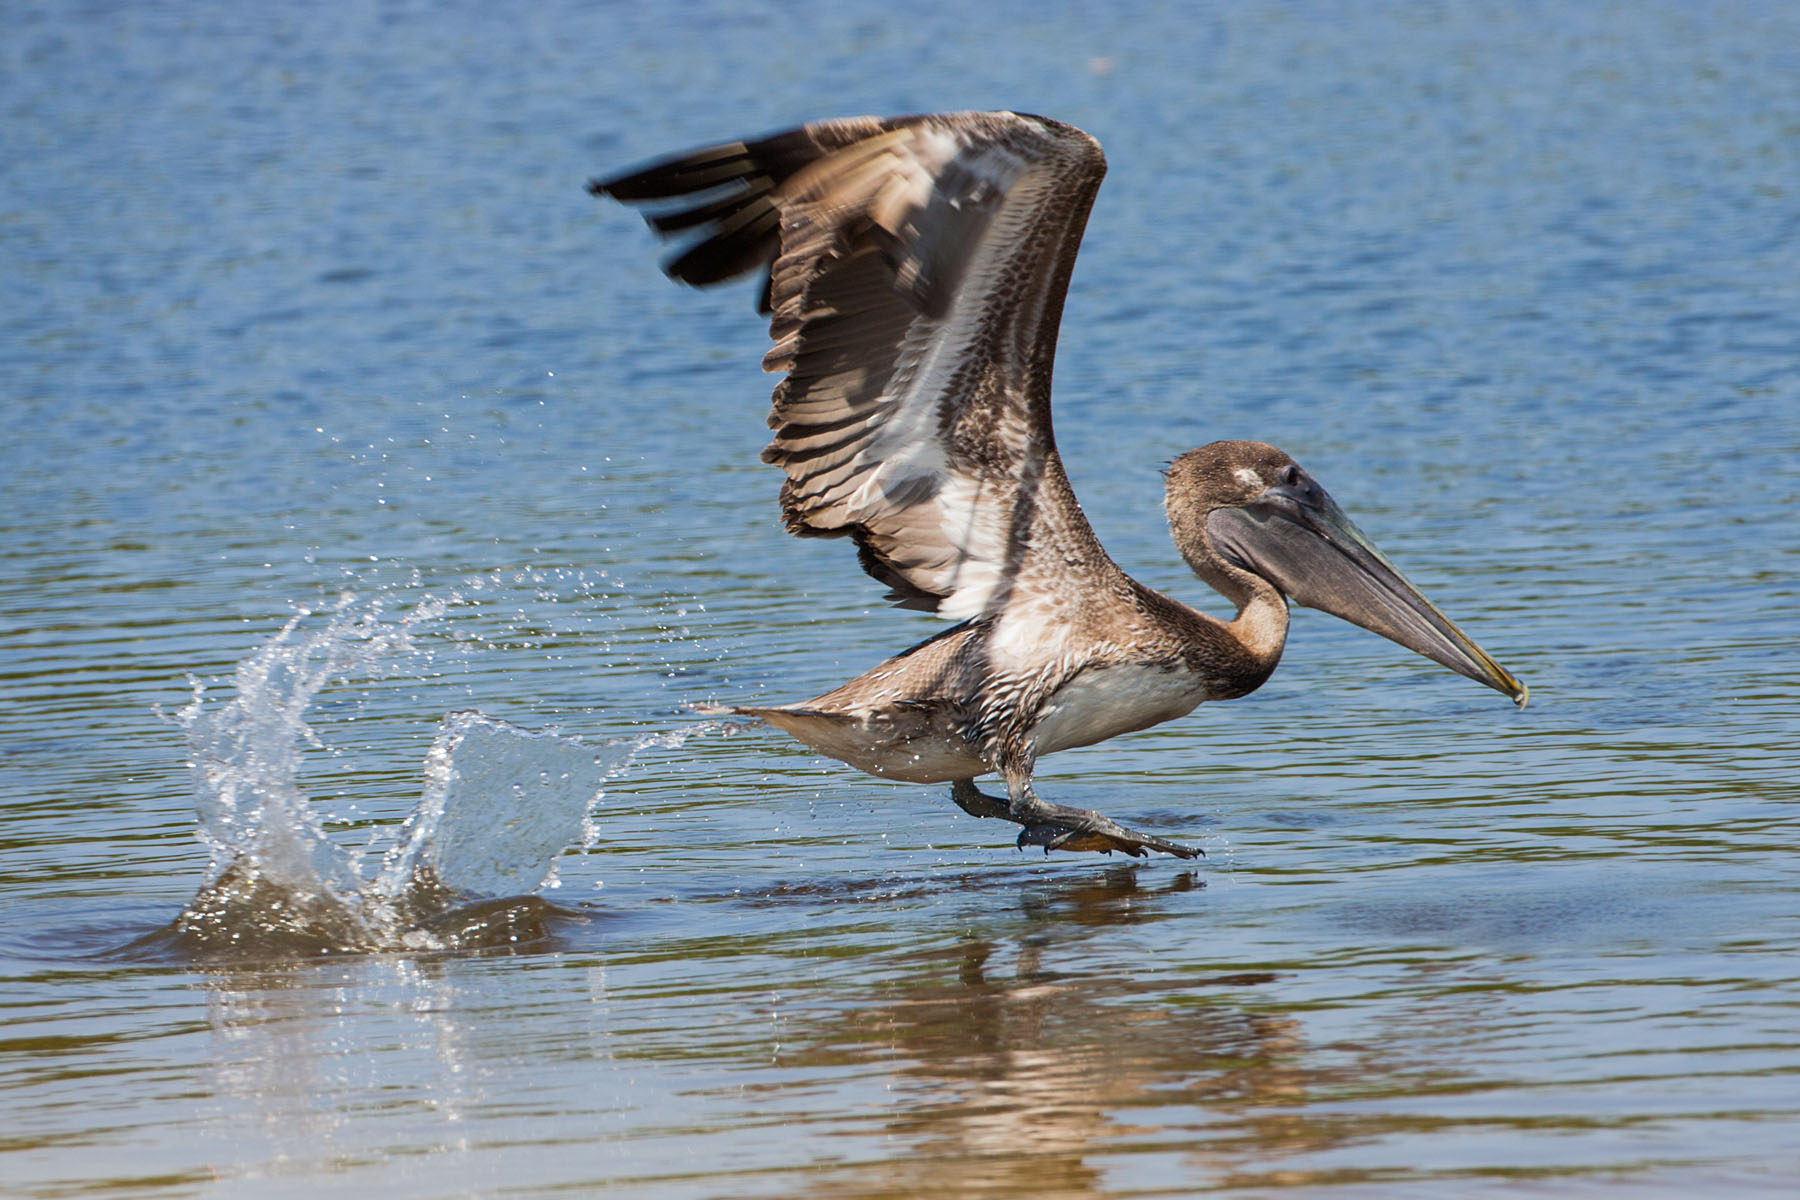 Brown Pelican splashing for fish, "Ding" Darling NWR, Sanibel Island, Florida.  Click for next photo.